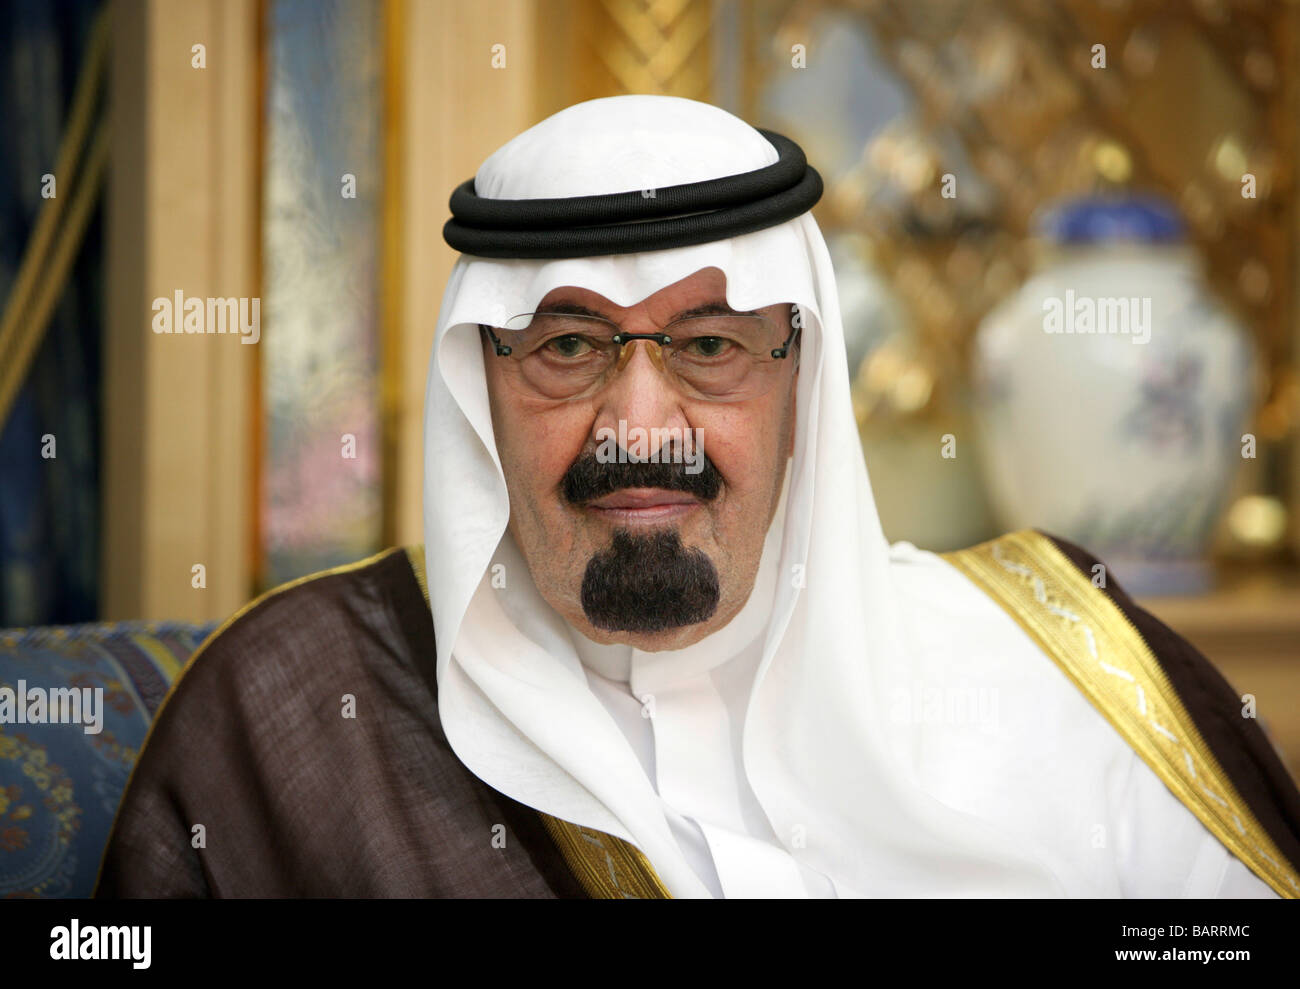 Abdullah bin Abdul Aziz Al Saud King of Saudi Arabia Stock Photo